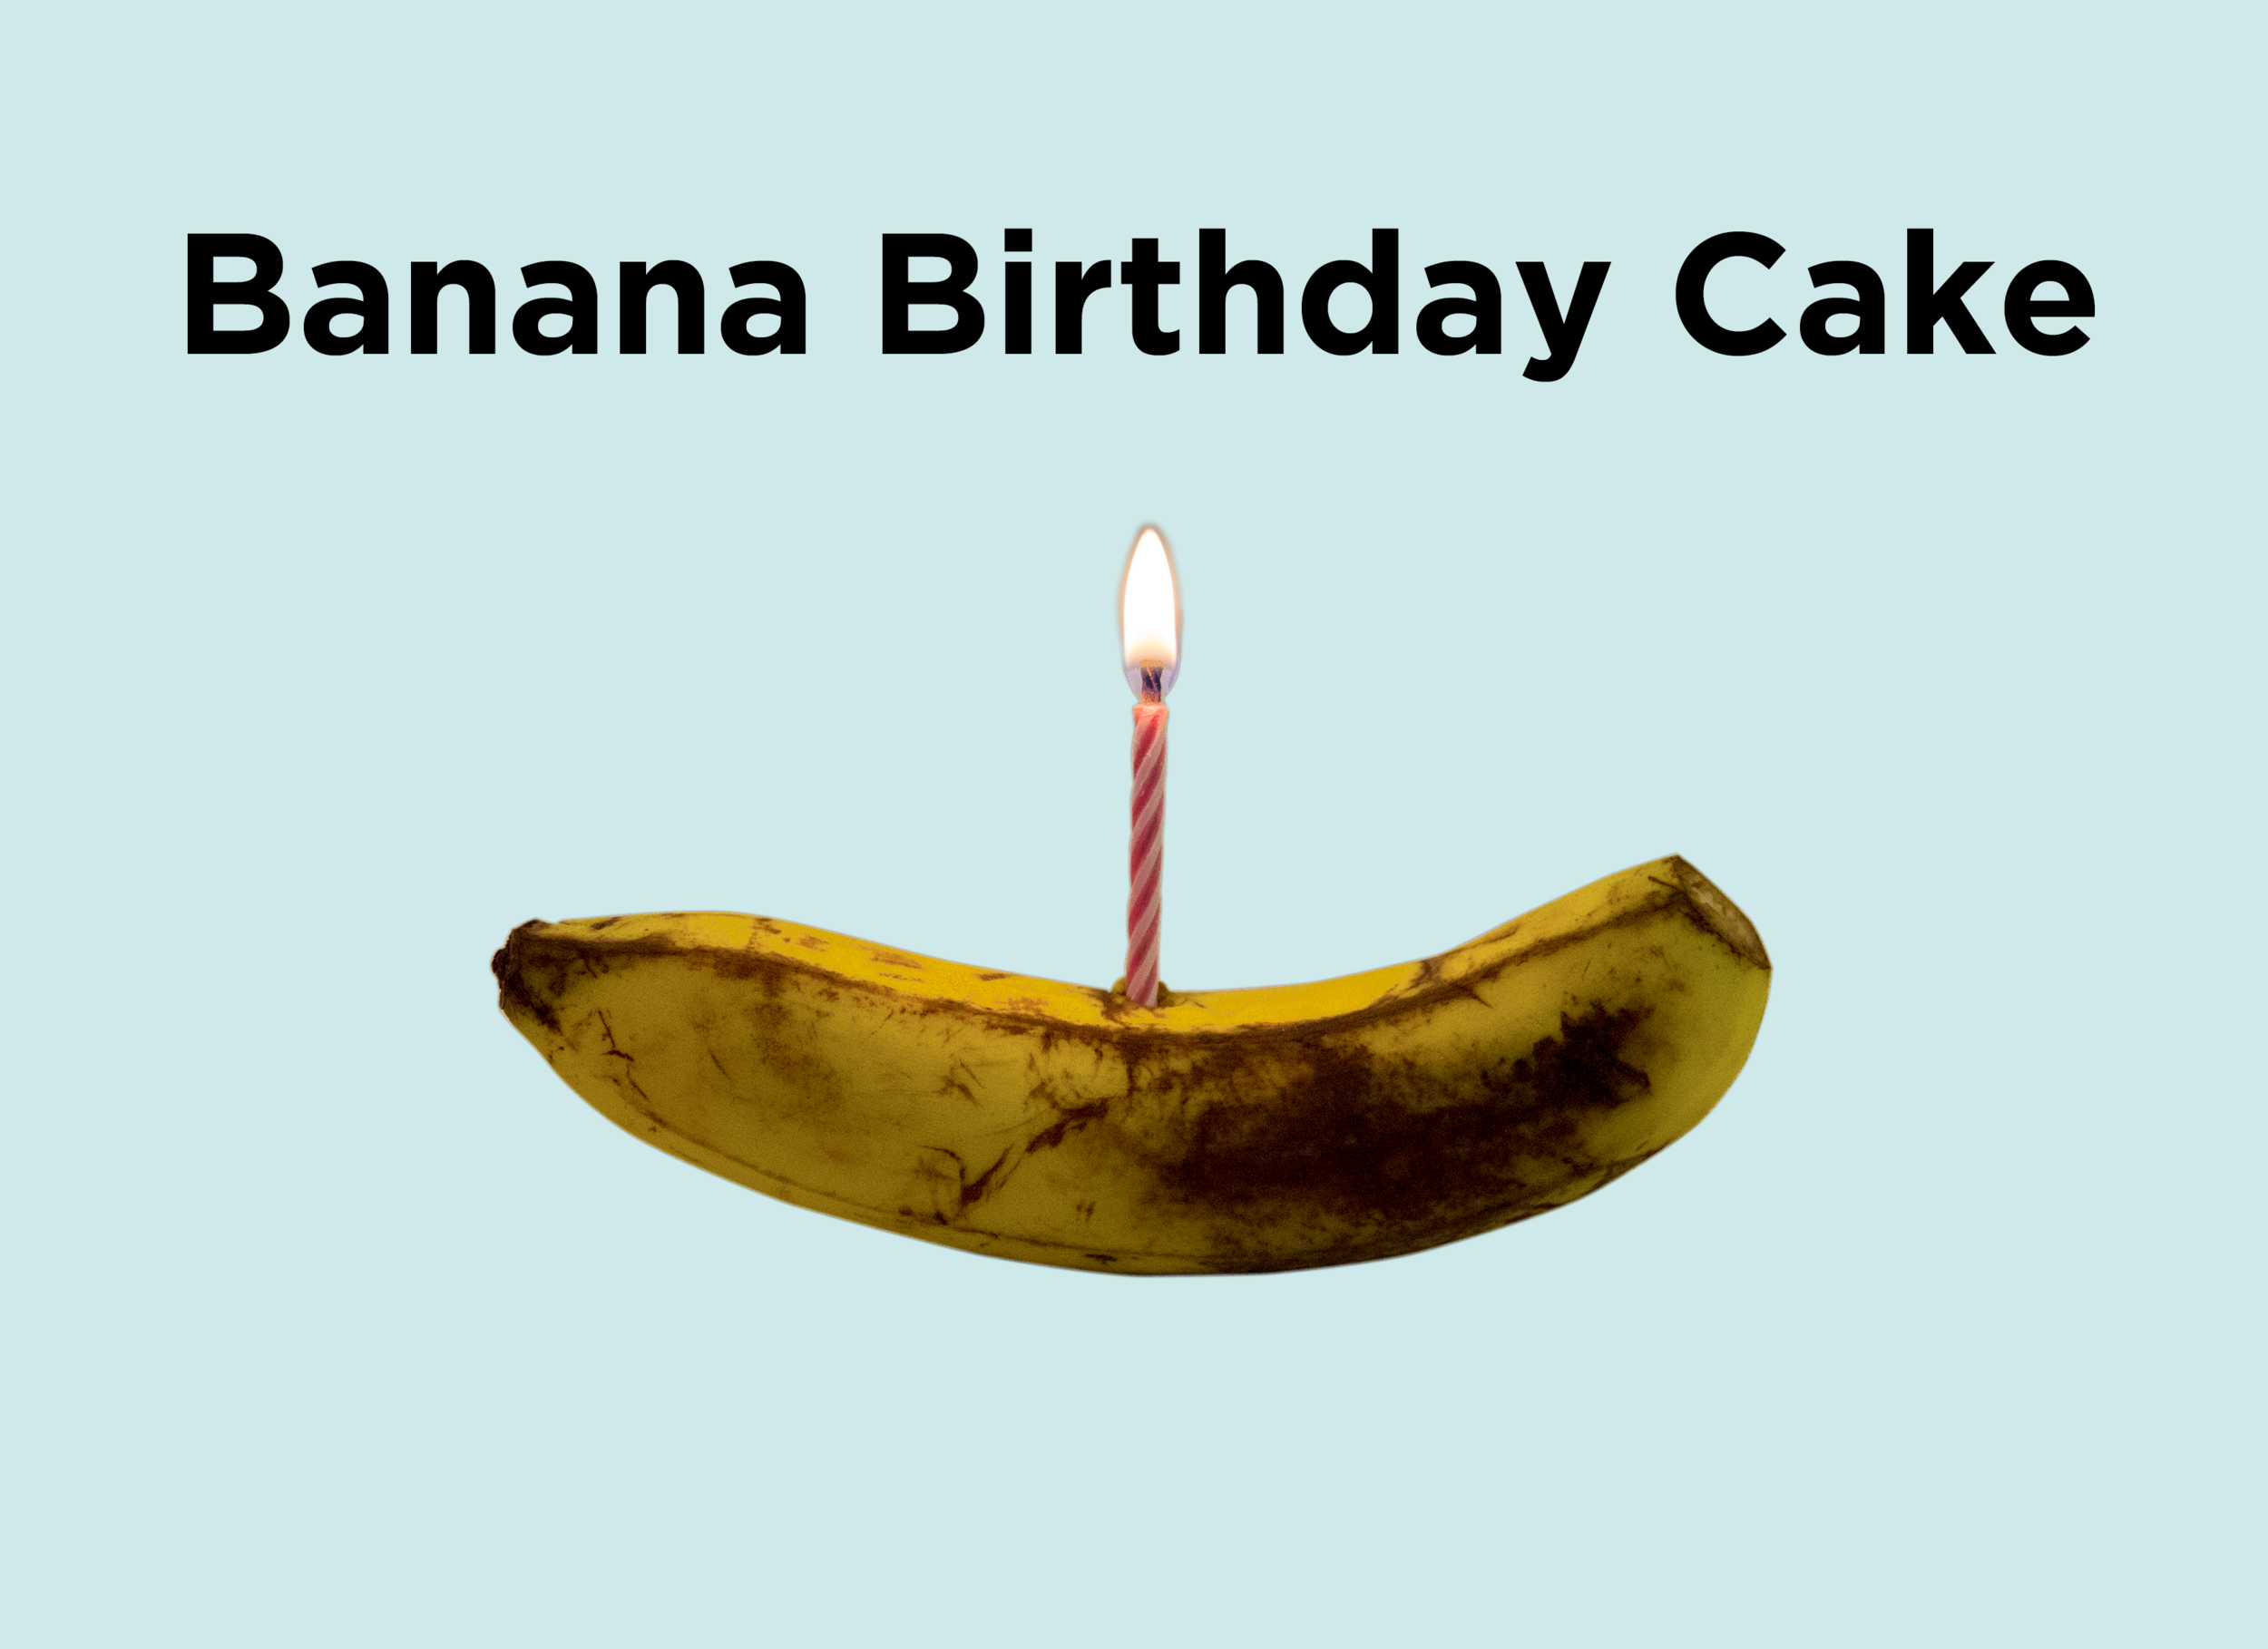 4. Banana Birthday Cake.png